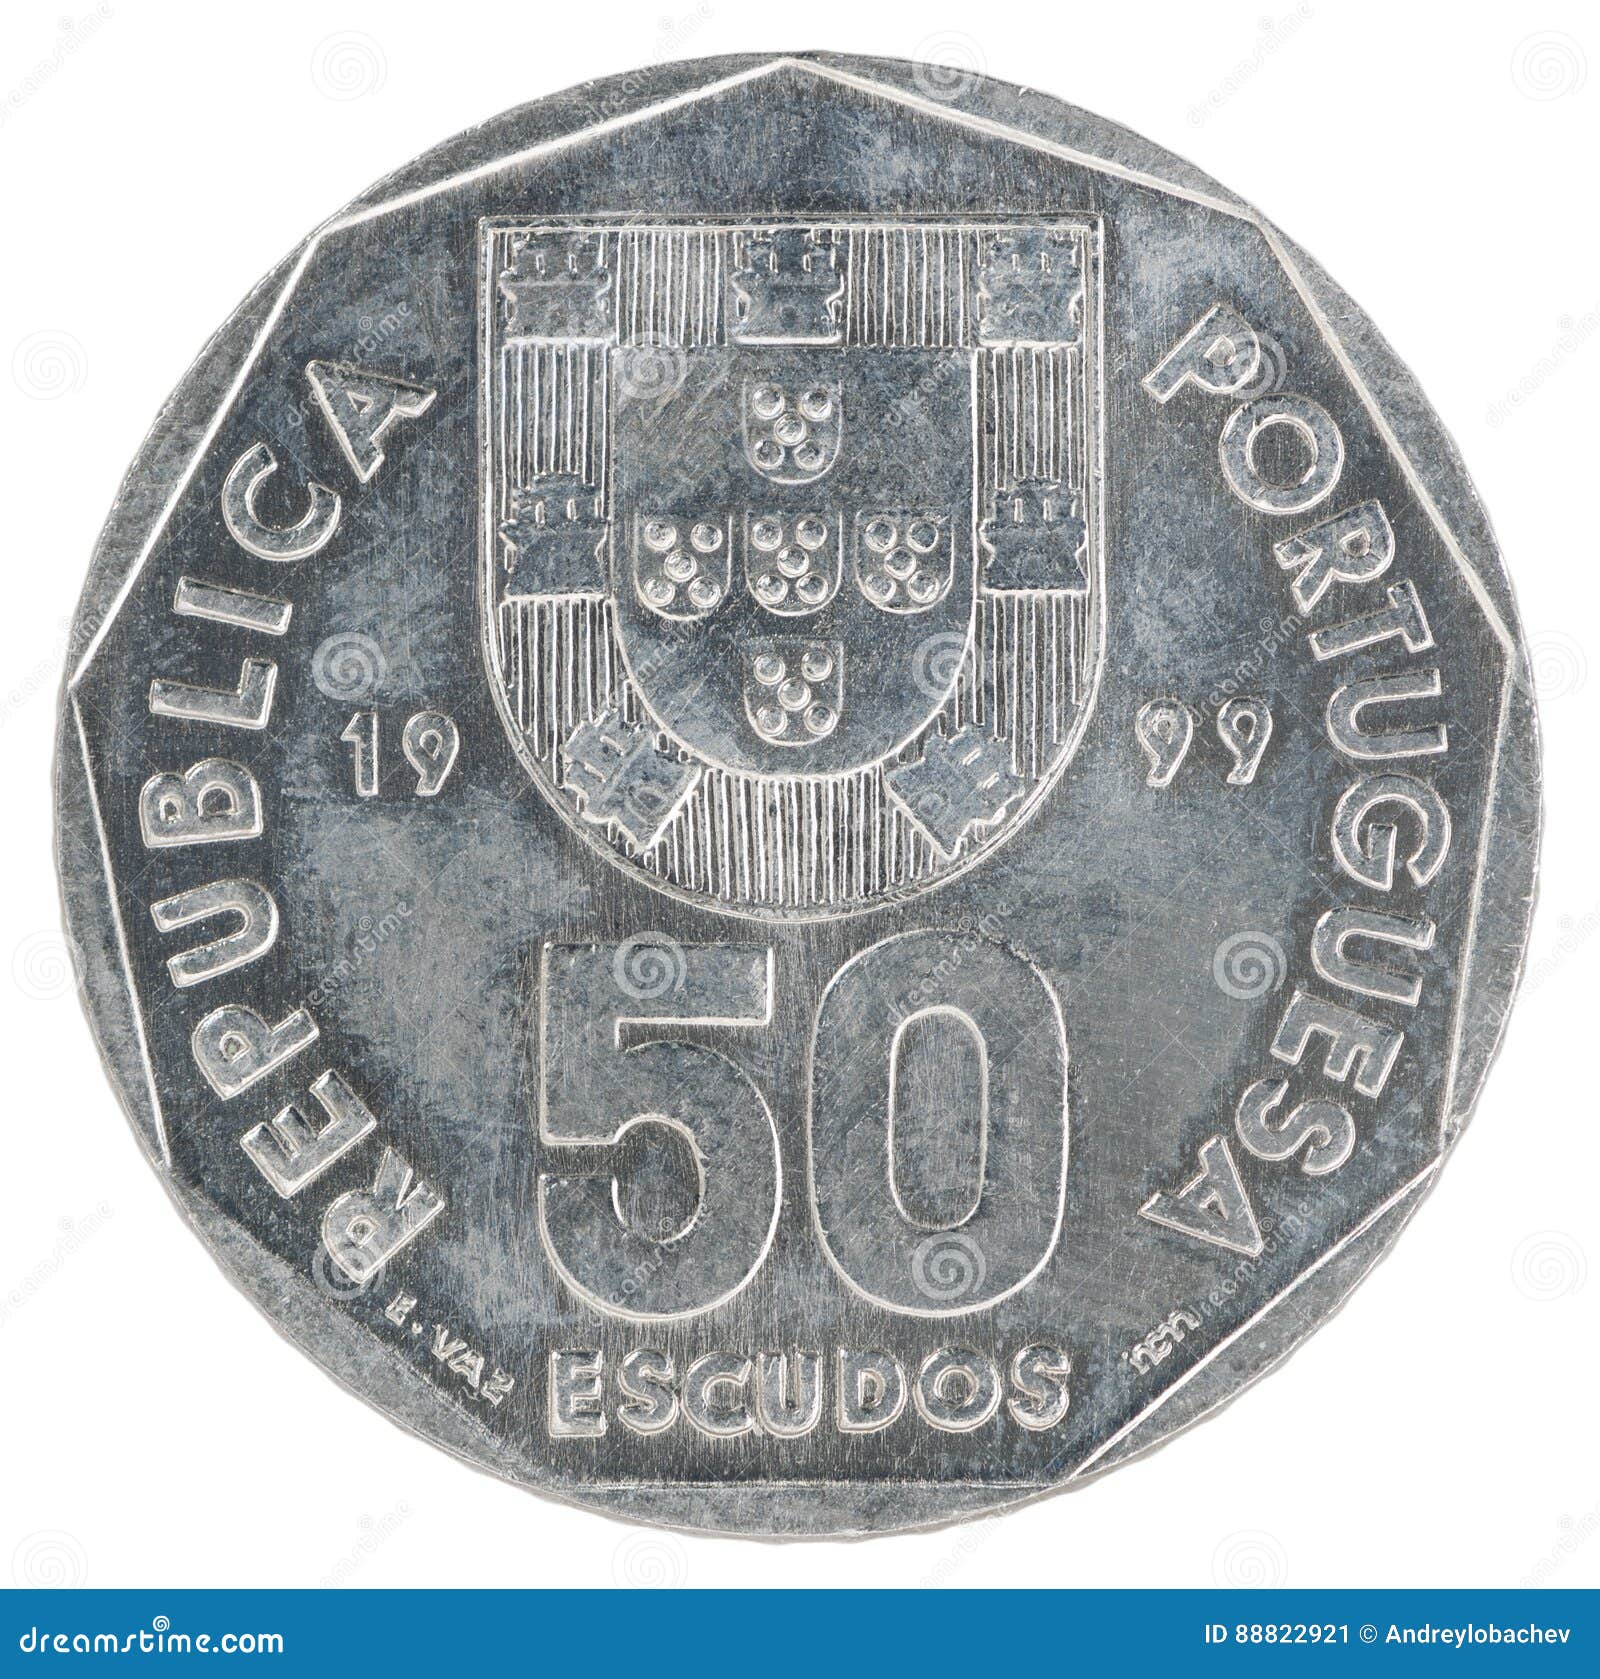 coin portuguese escudo